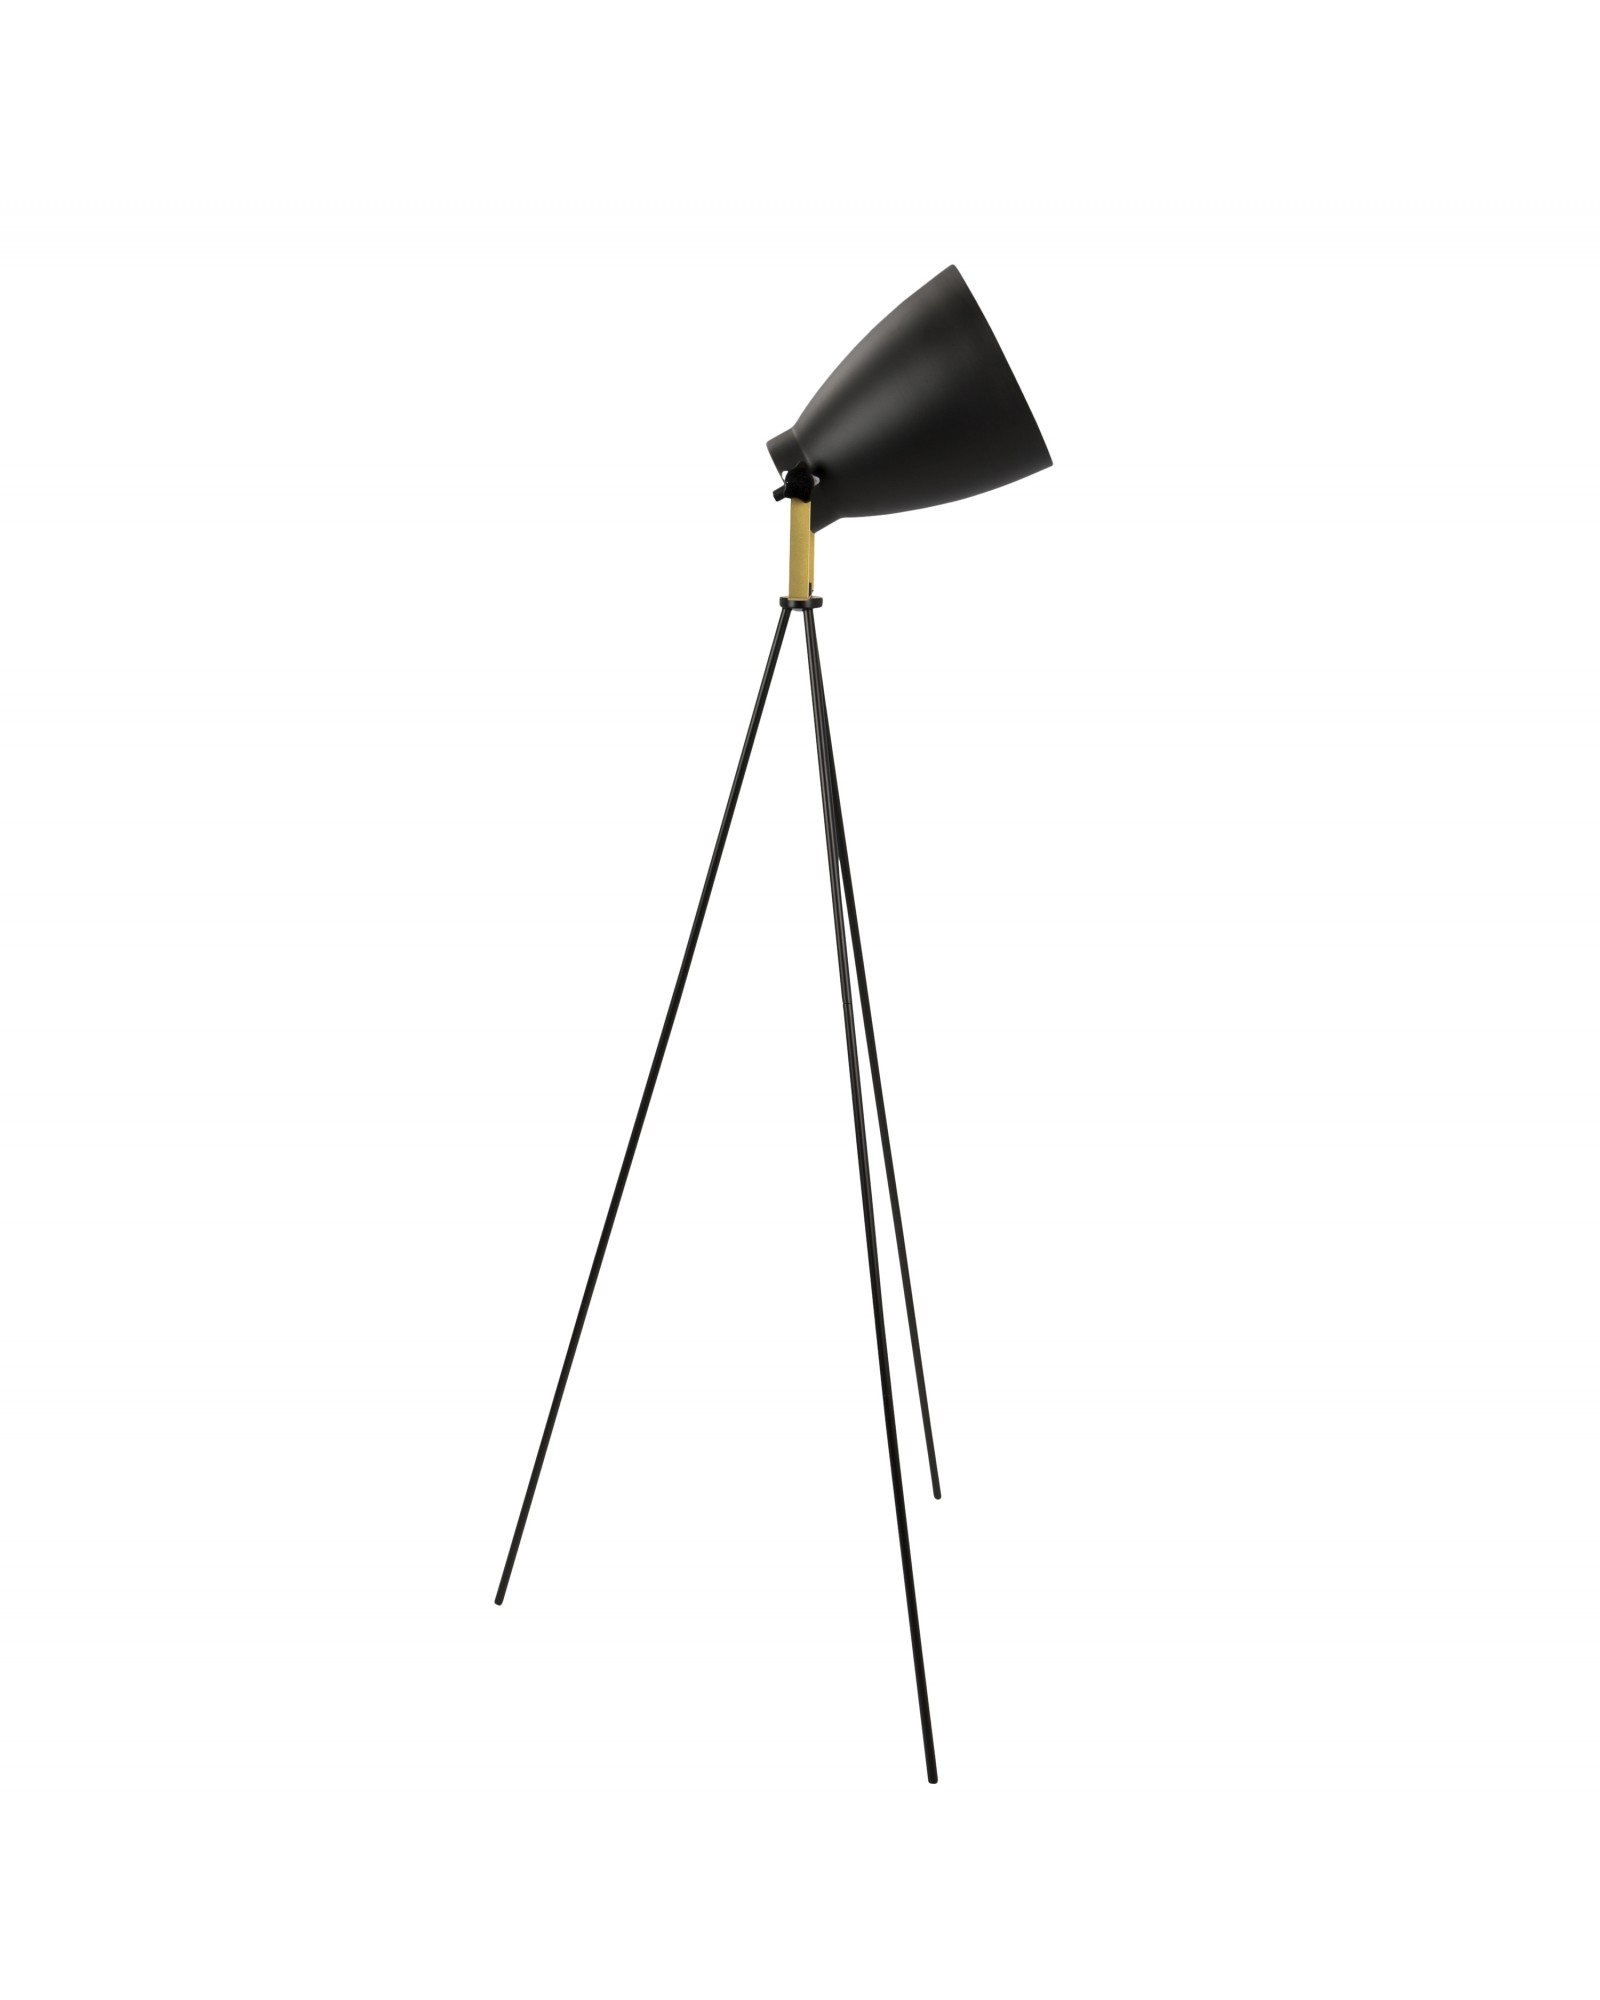 Grammy Modern Reader Lamp in Black and Gold